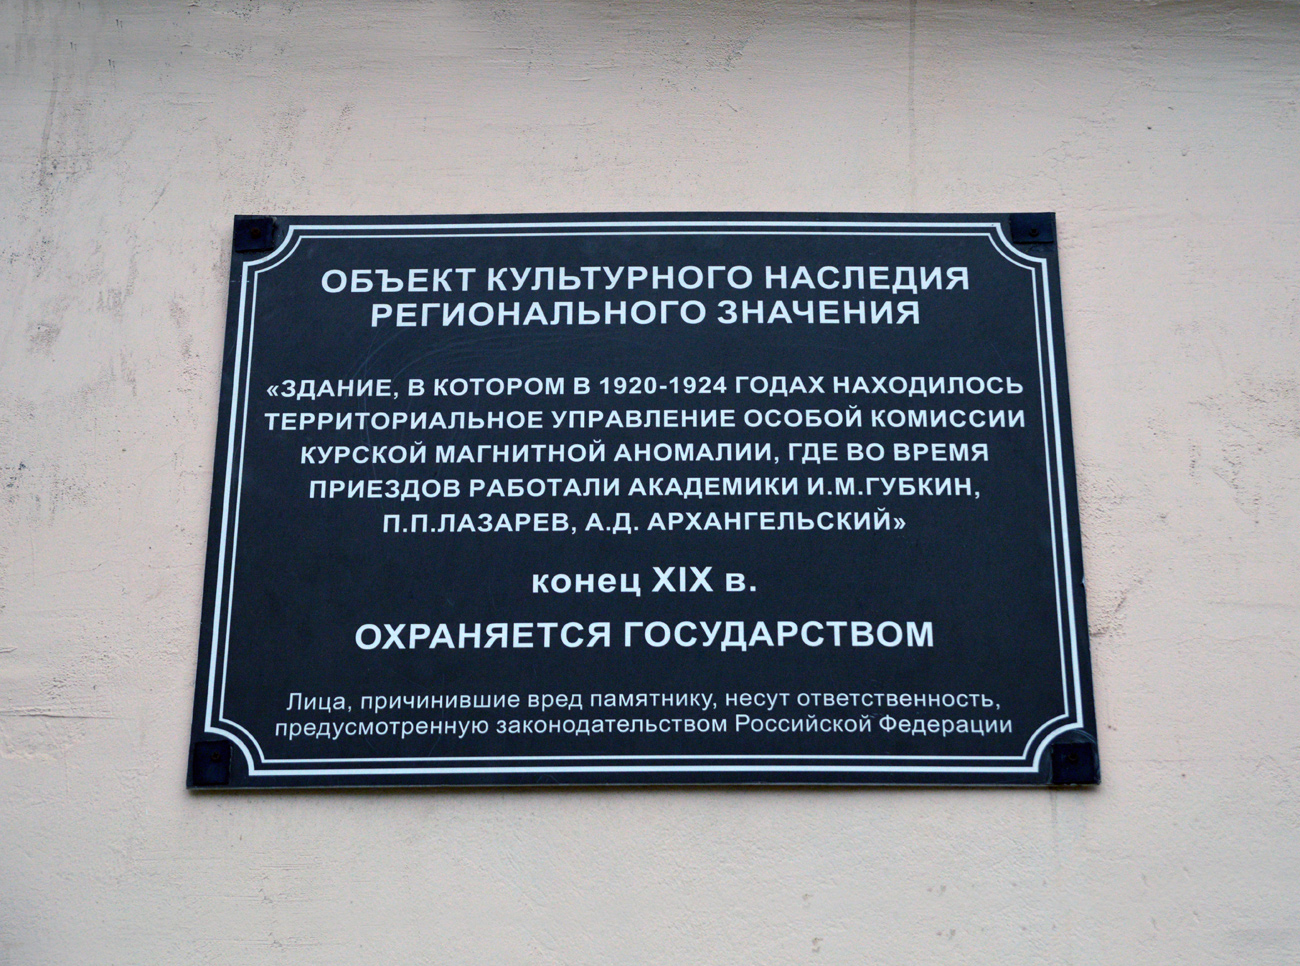 Stary Oskol, . Memorial plaques